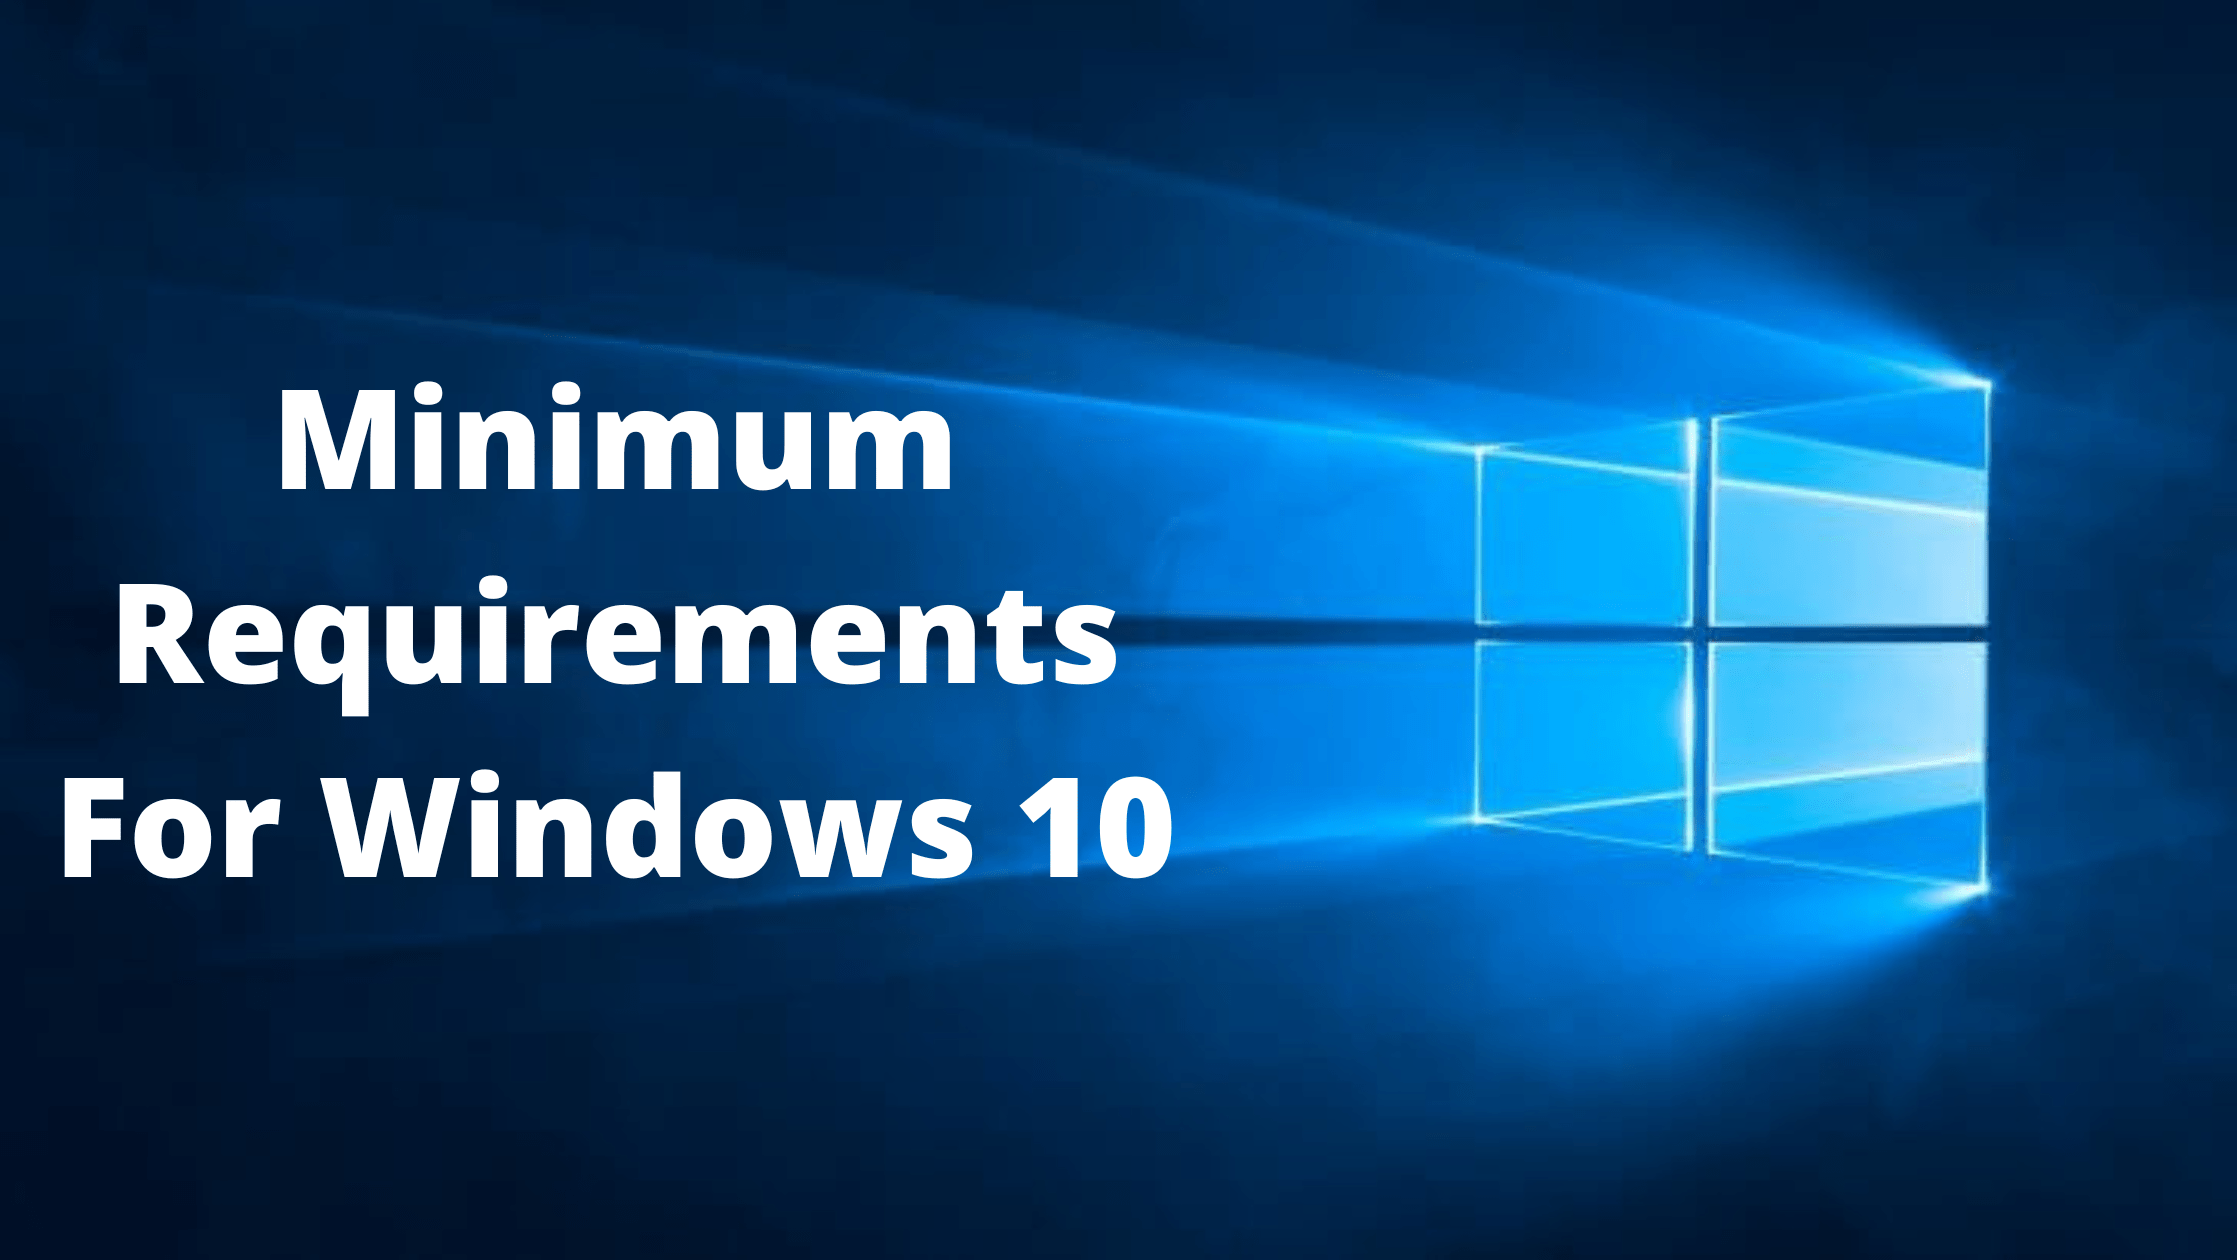 Minimum requirements for Windows 10?